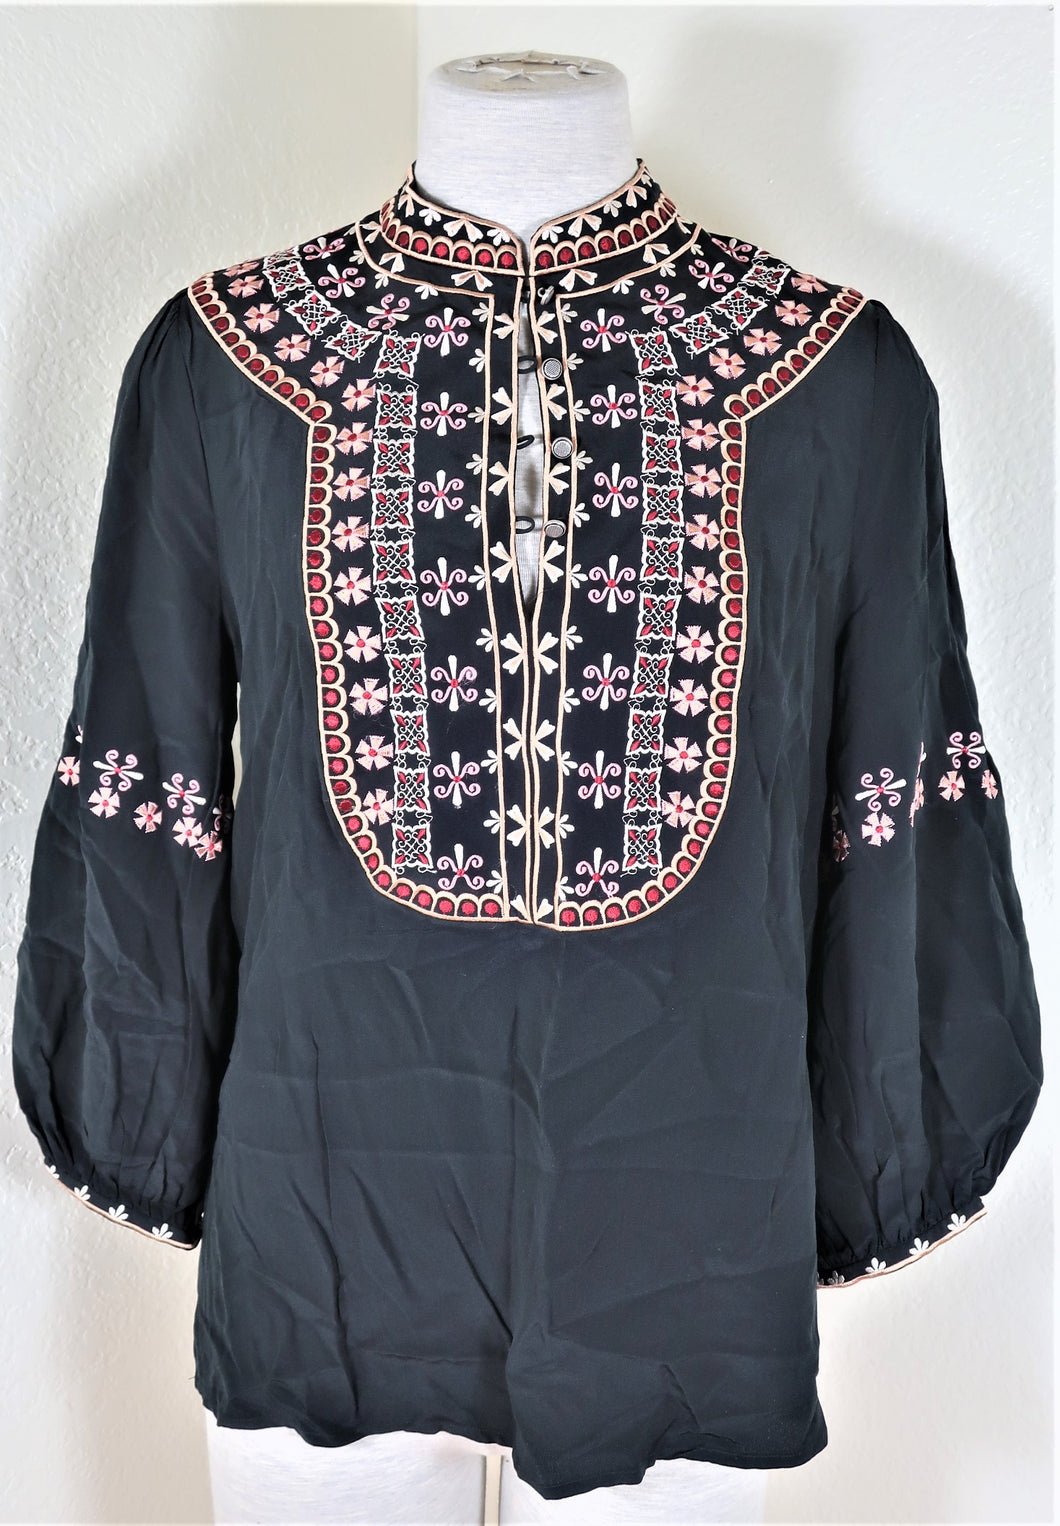 VILSHENKO Black Embroidered Long Sleeve SILK Blouse Top Shirt S M 4 5 6